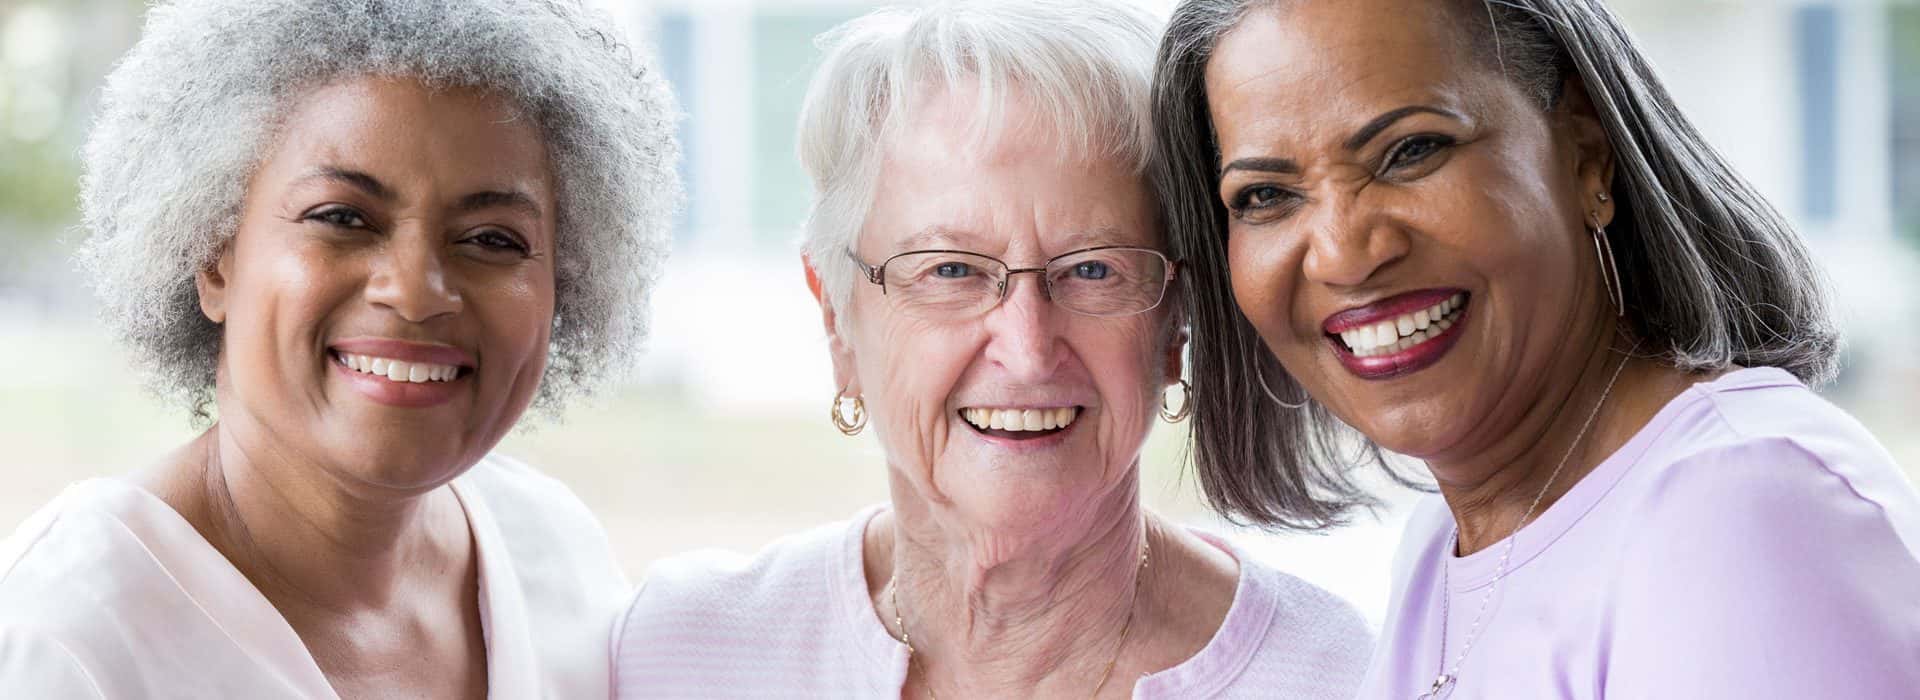 Group of diverse older women